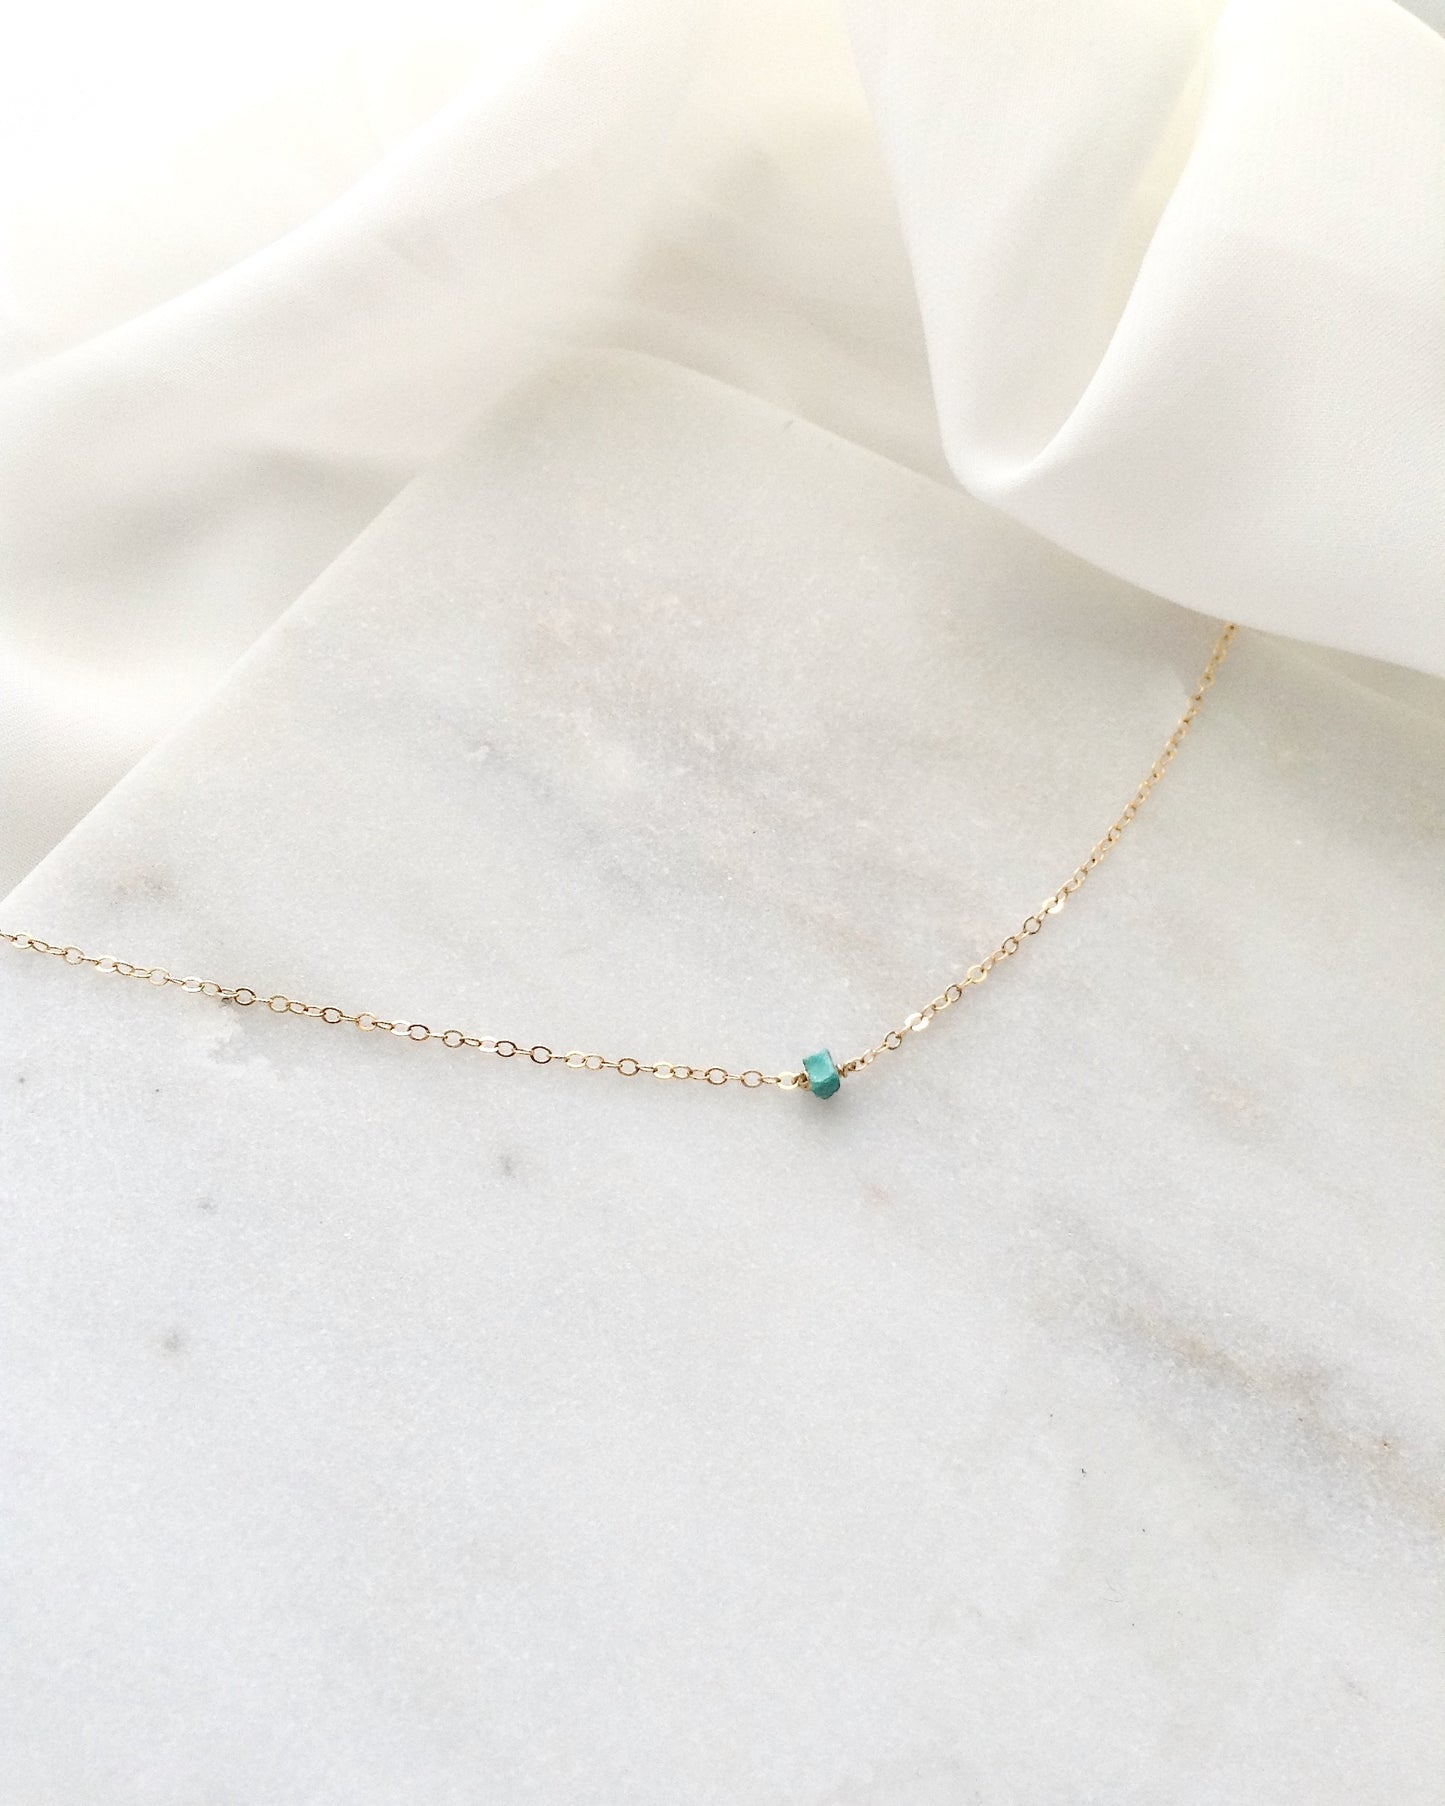 Tuquoise Gemstone Choker | Dainty Turquoise Choker | Simple Chain Choker Necklace | IB Jewelry